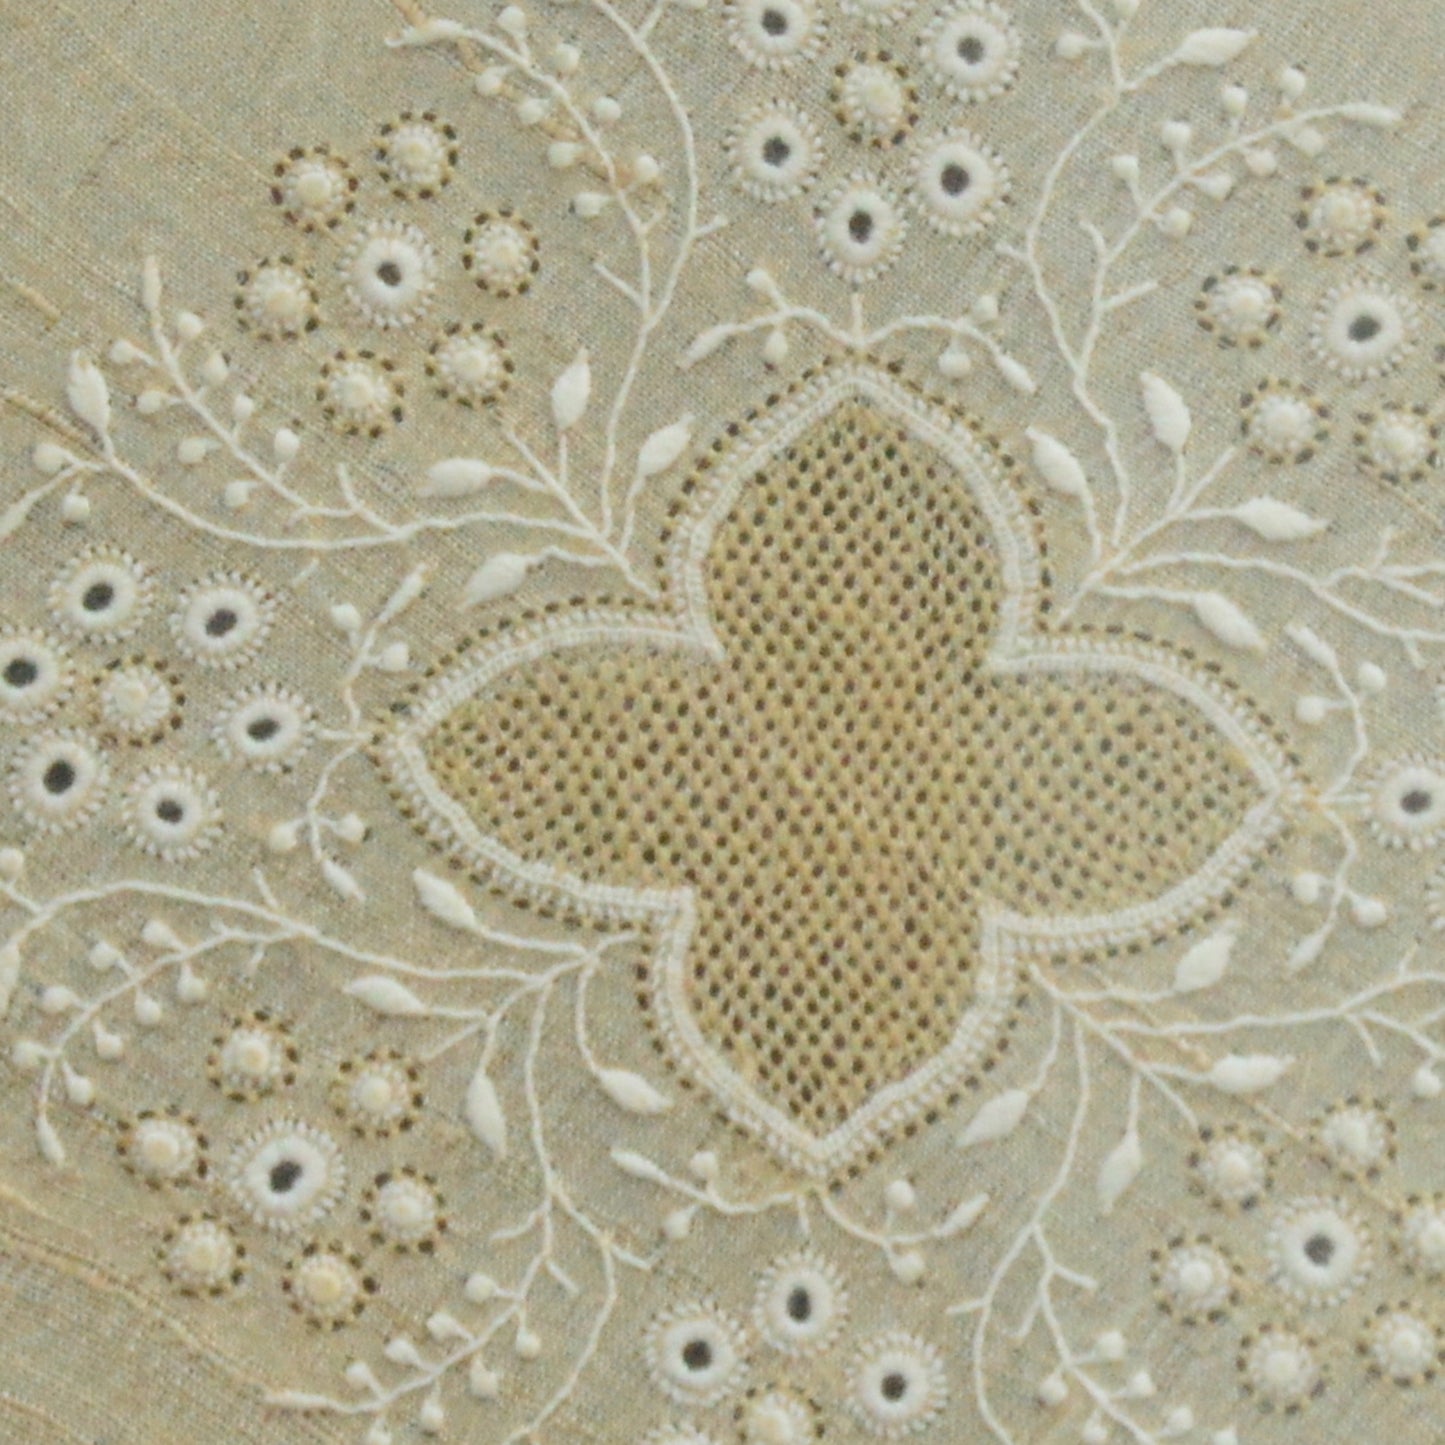 India, Bhairvis Chikan / Mamta Varma, Embroidery